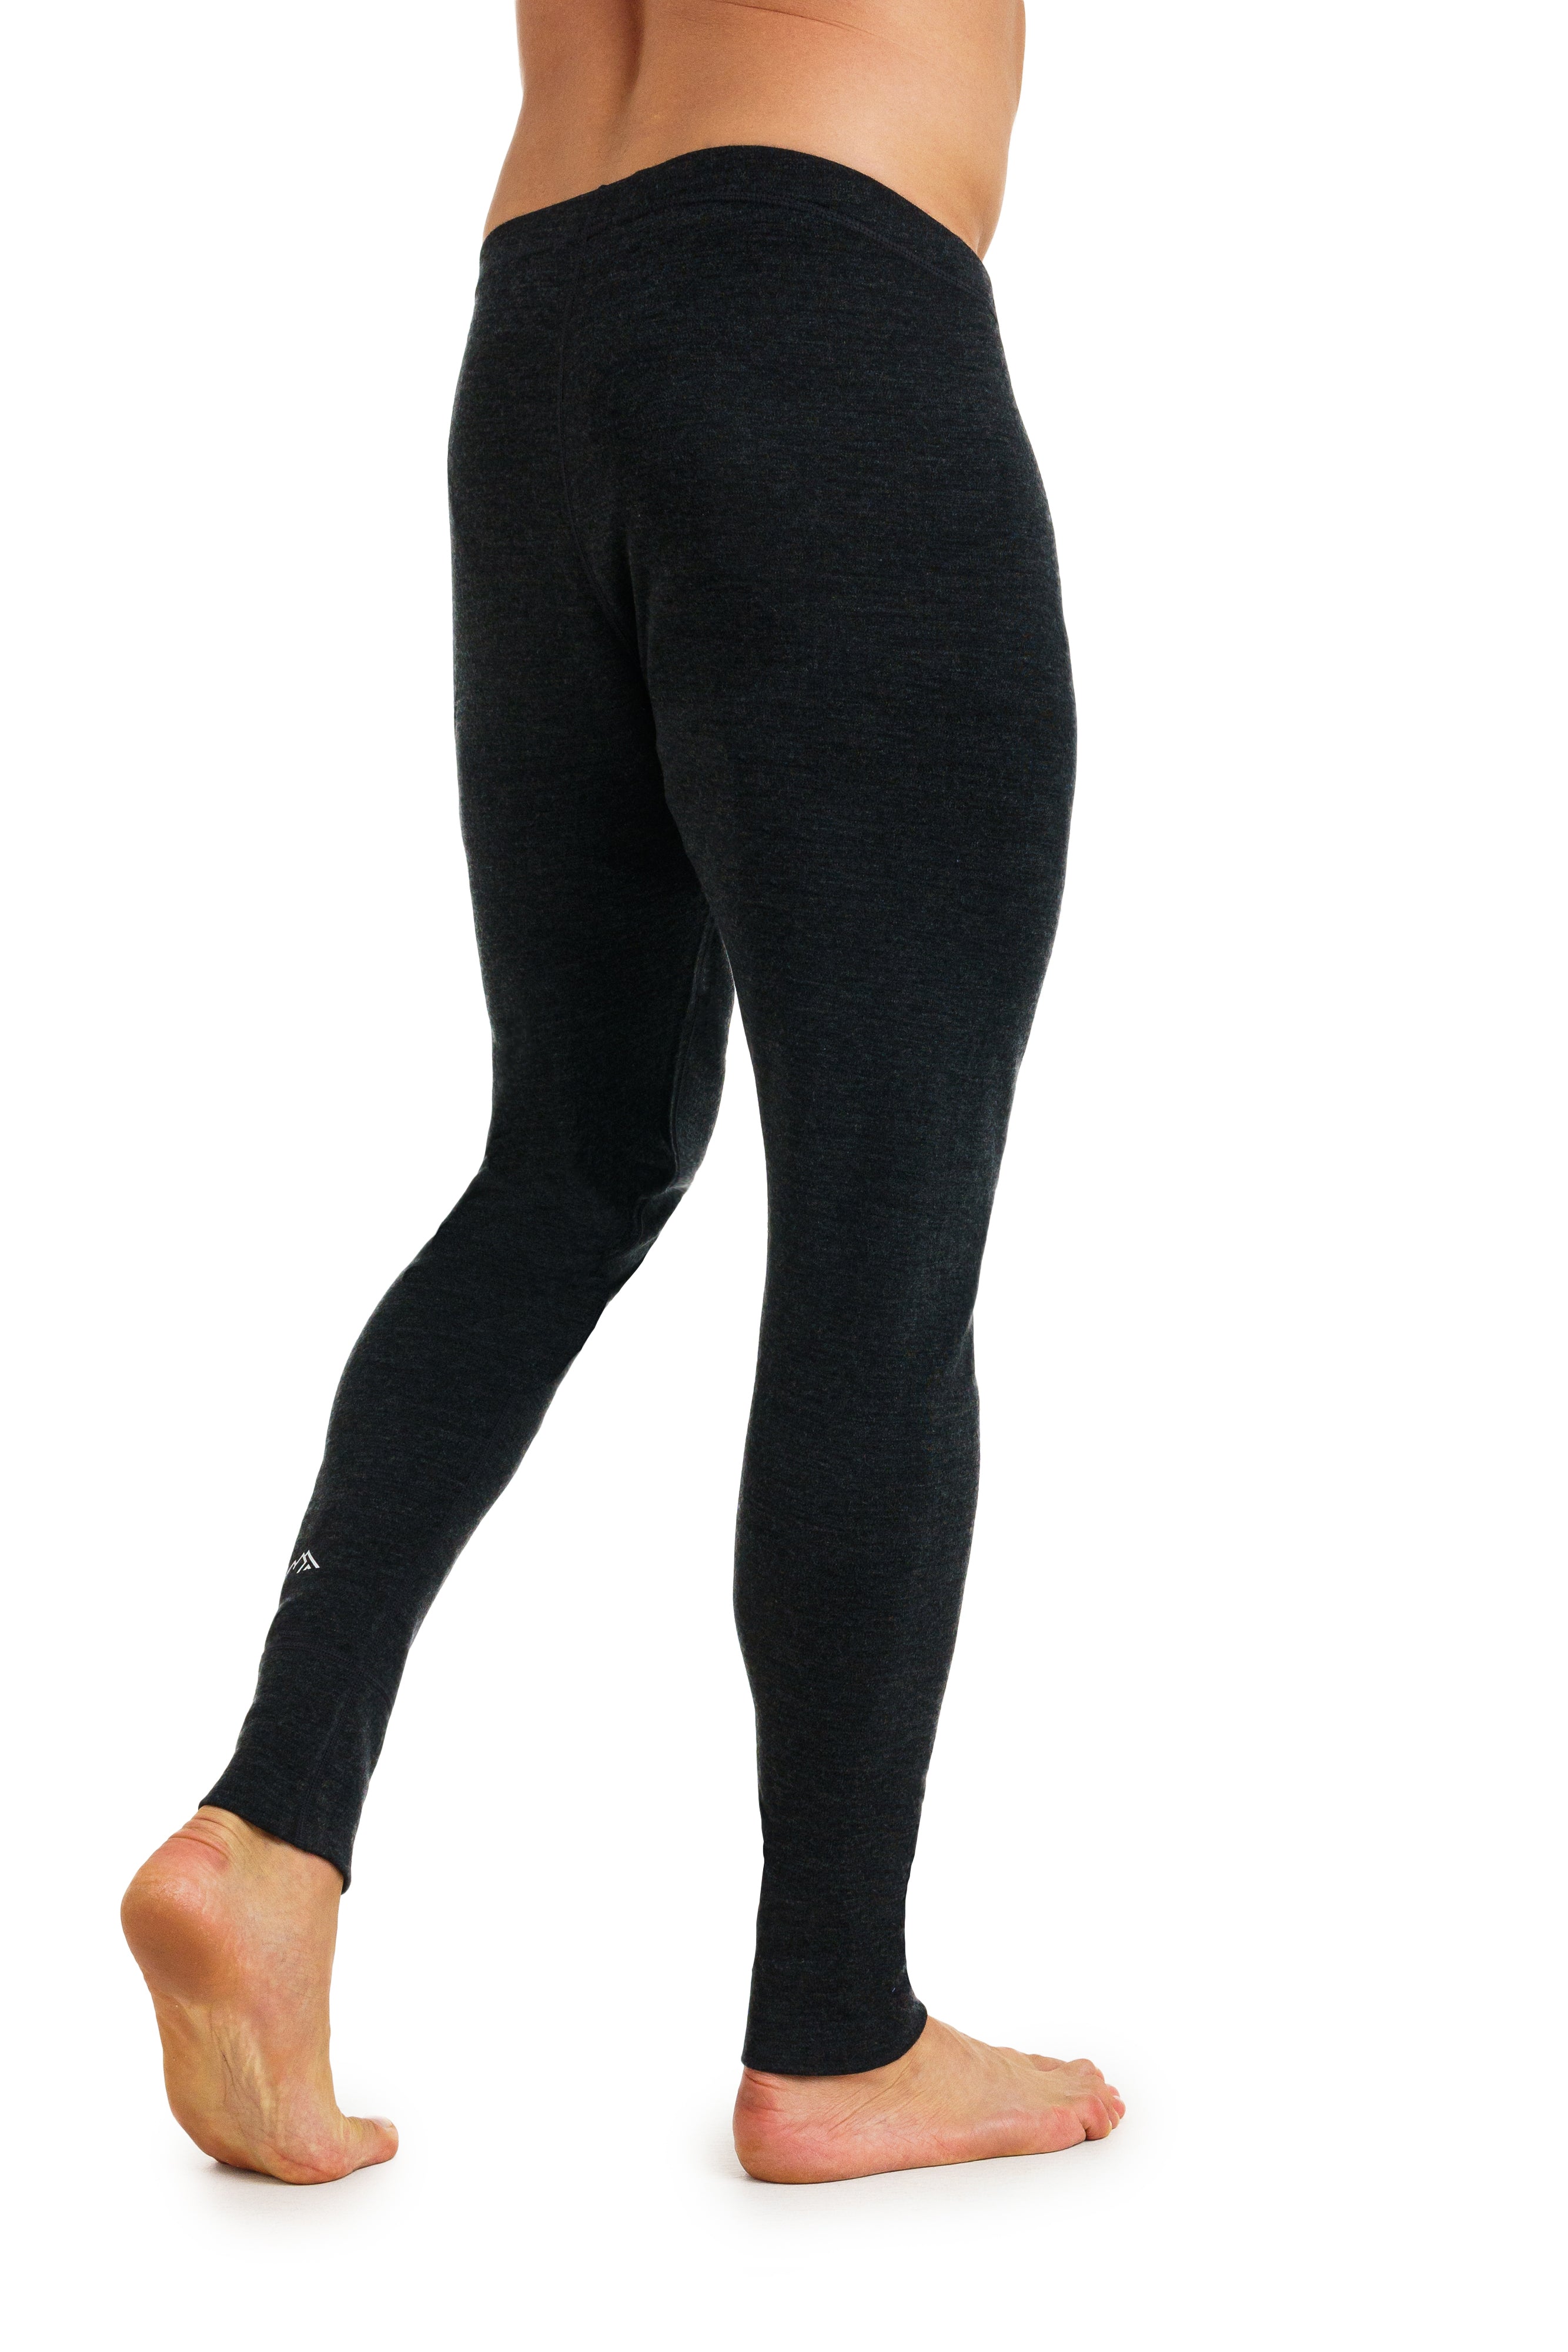 Merino Wool Pants - Heavyweight Base Layer Charcoal Grey, Bottom, Underwear, Thermal